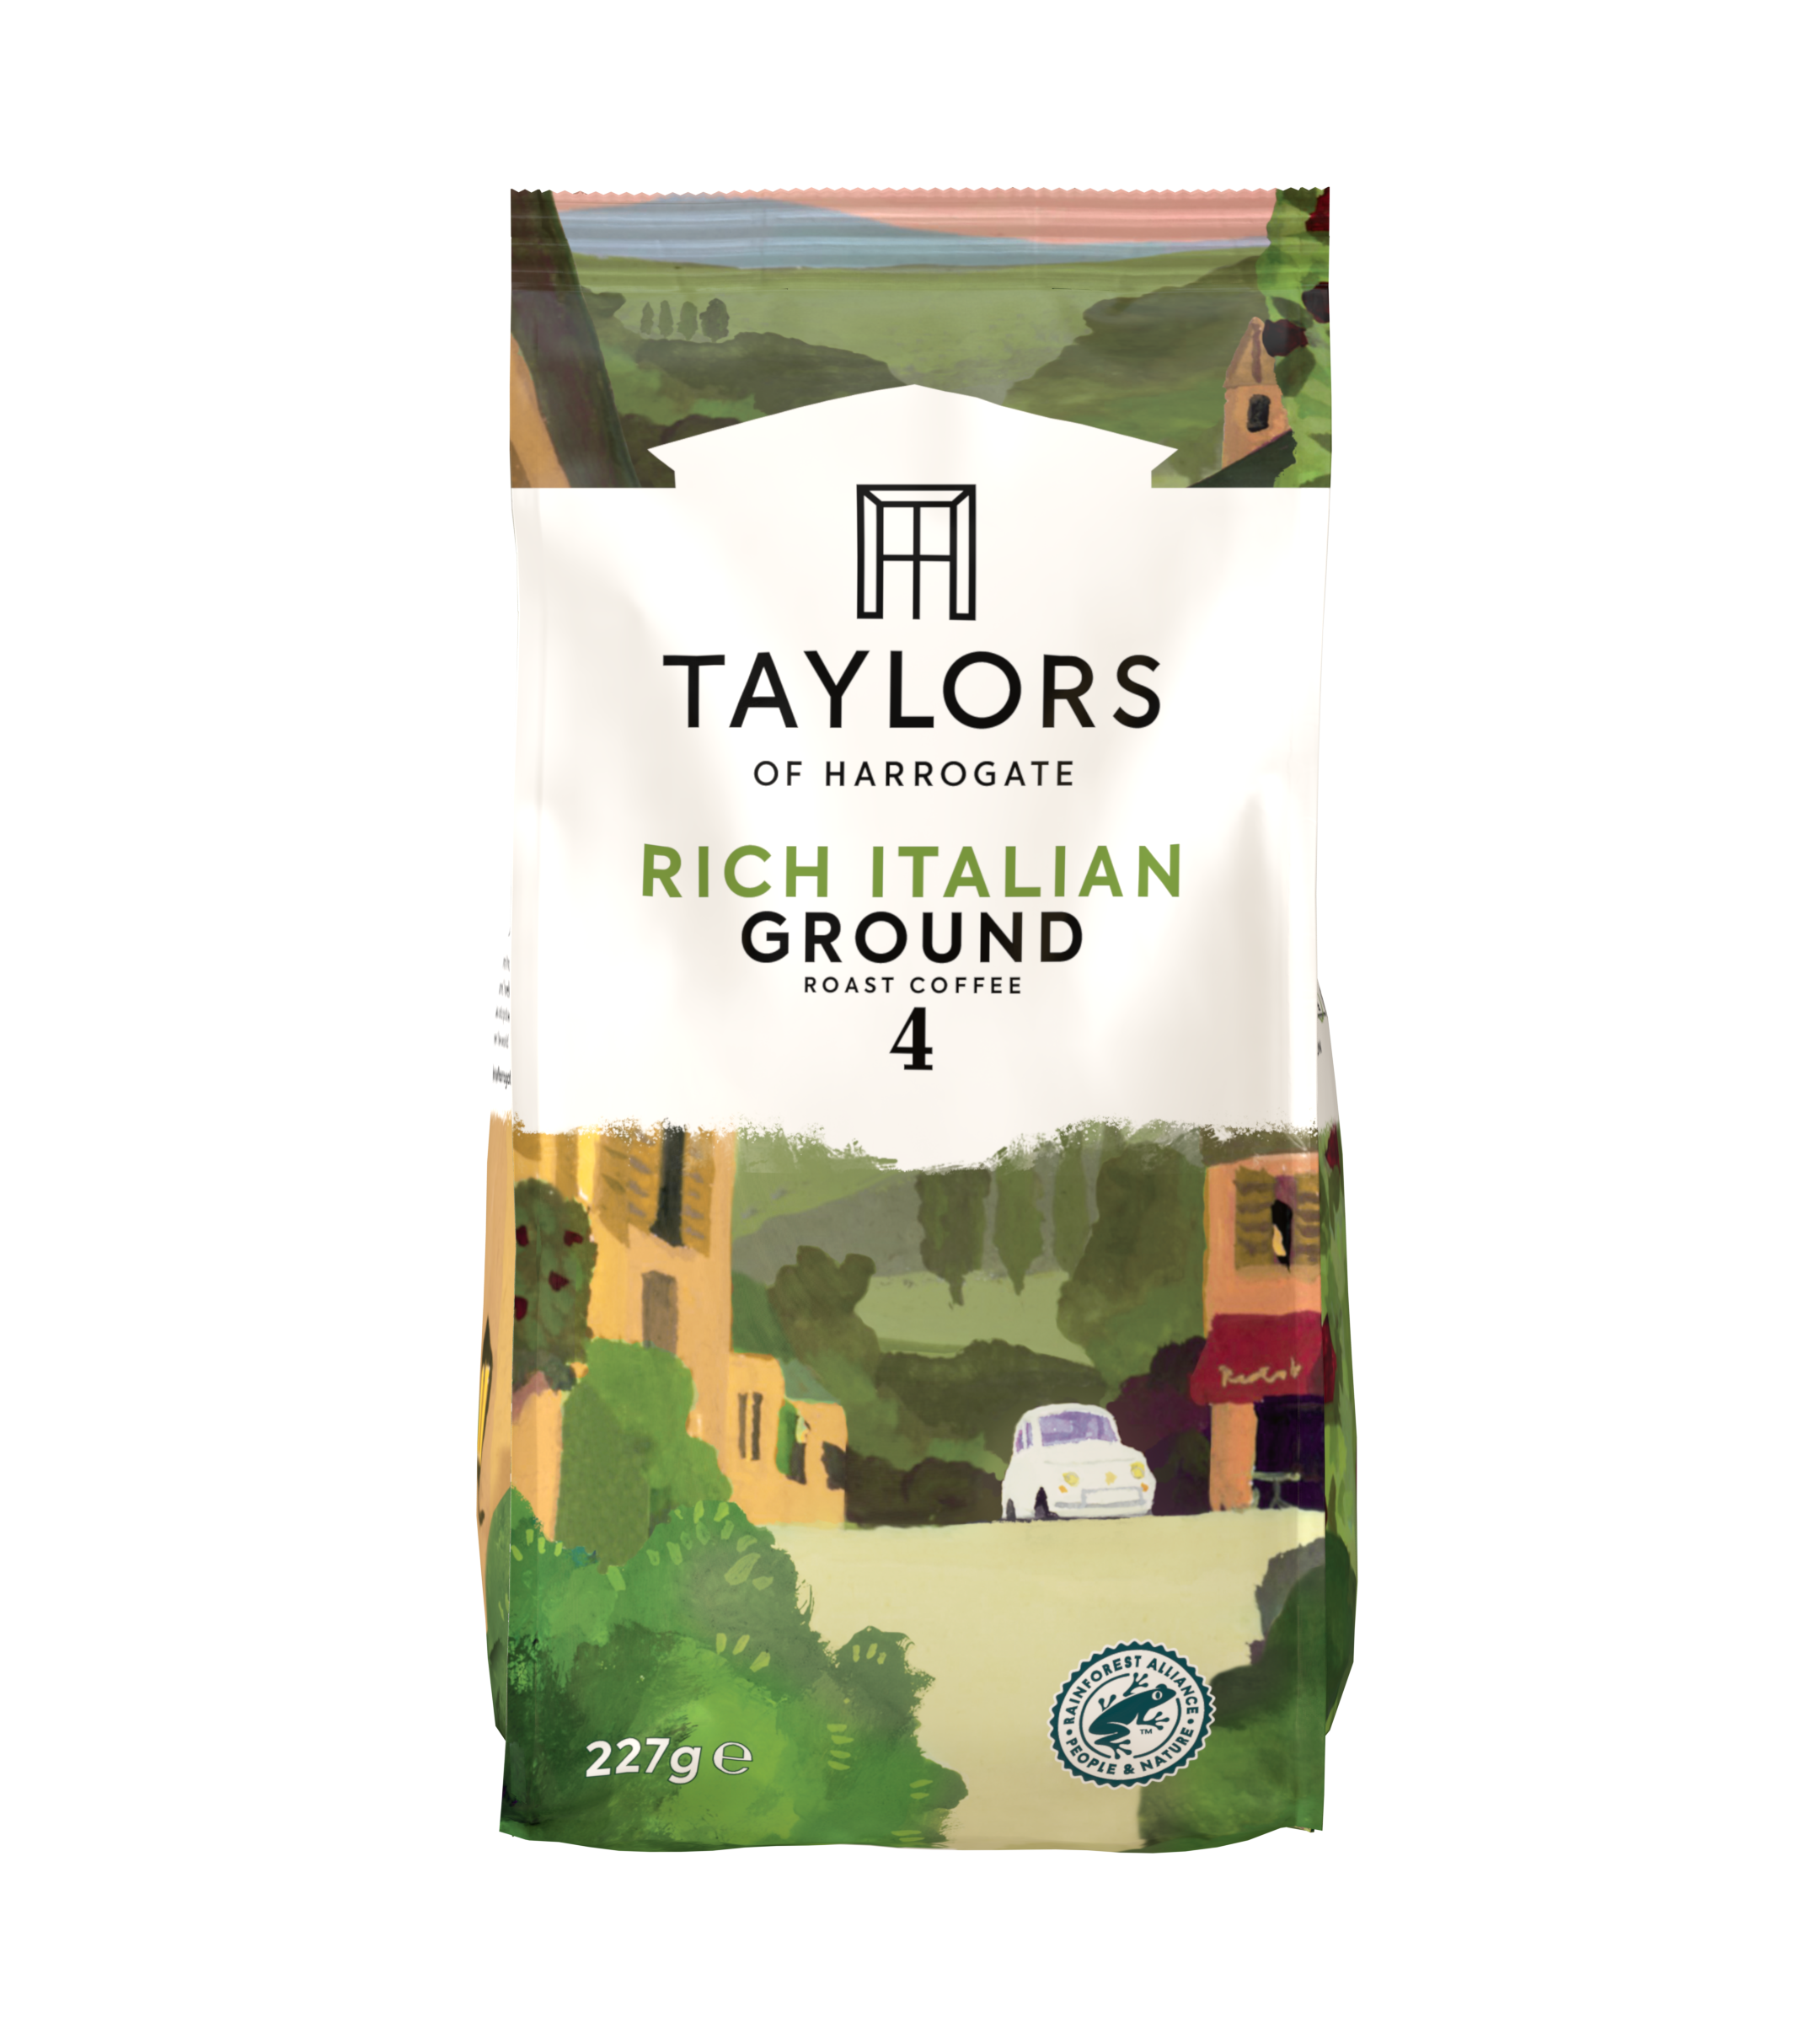 Refresh for Taylors Of Harrogate coffee packaging